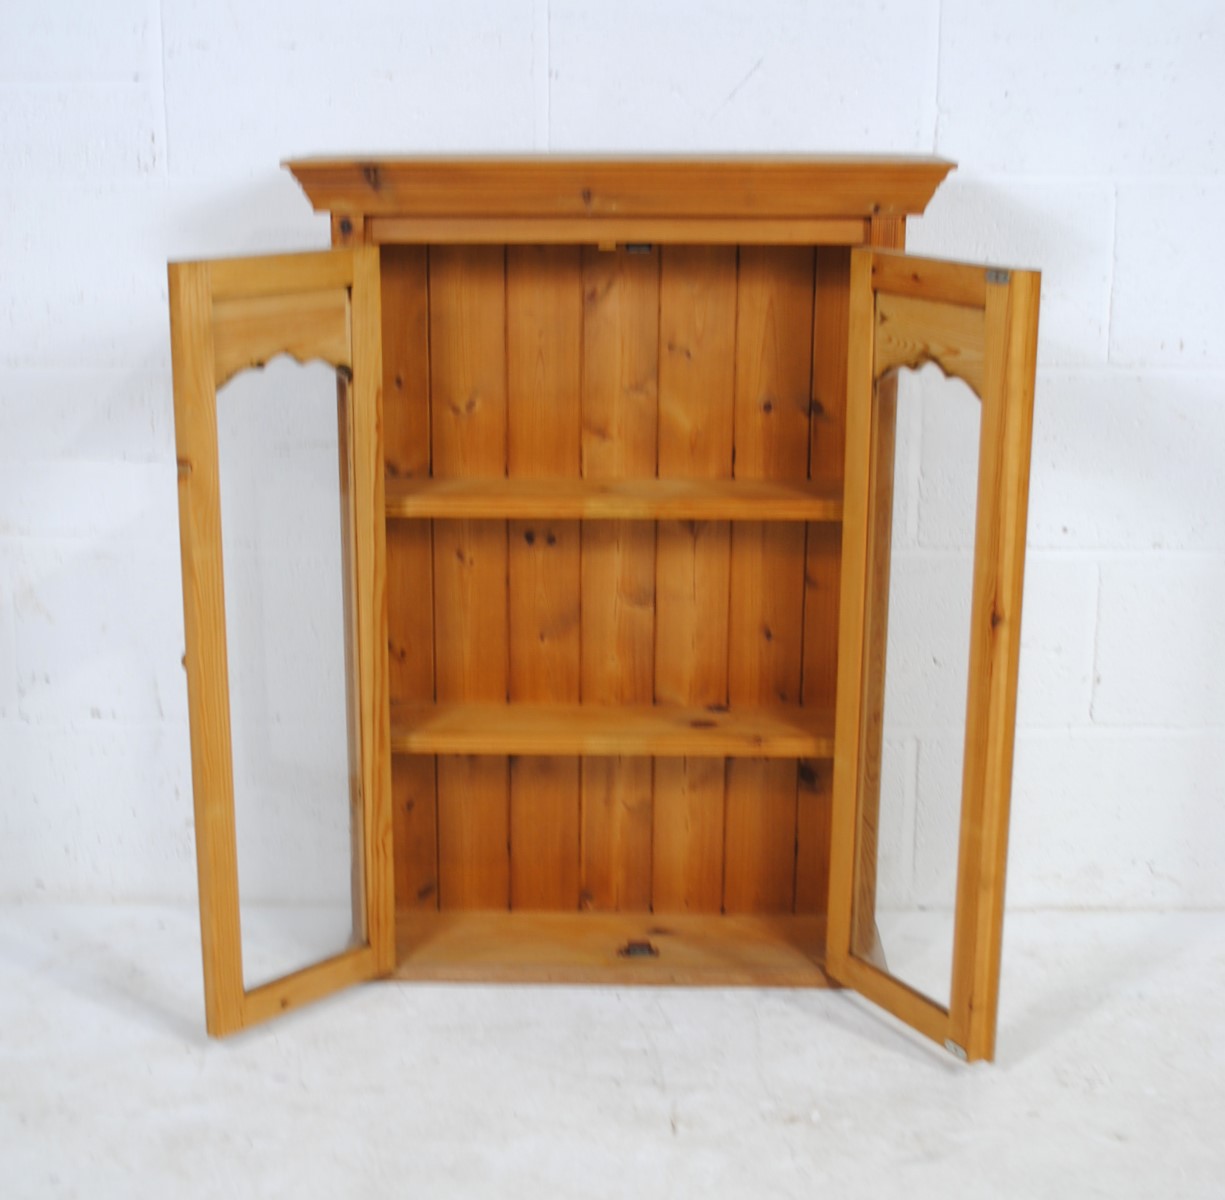 A pine glazed two door cabinet - length 71cm, depth 20.5cm, height 95cm - Image 7 of 7